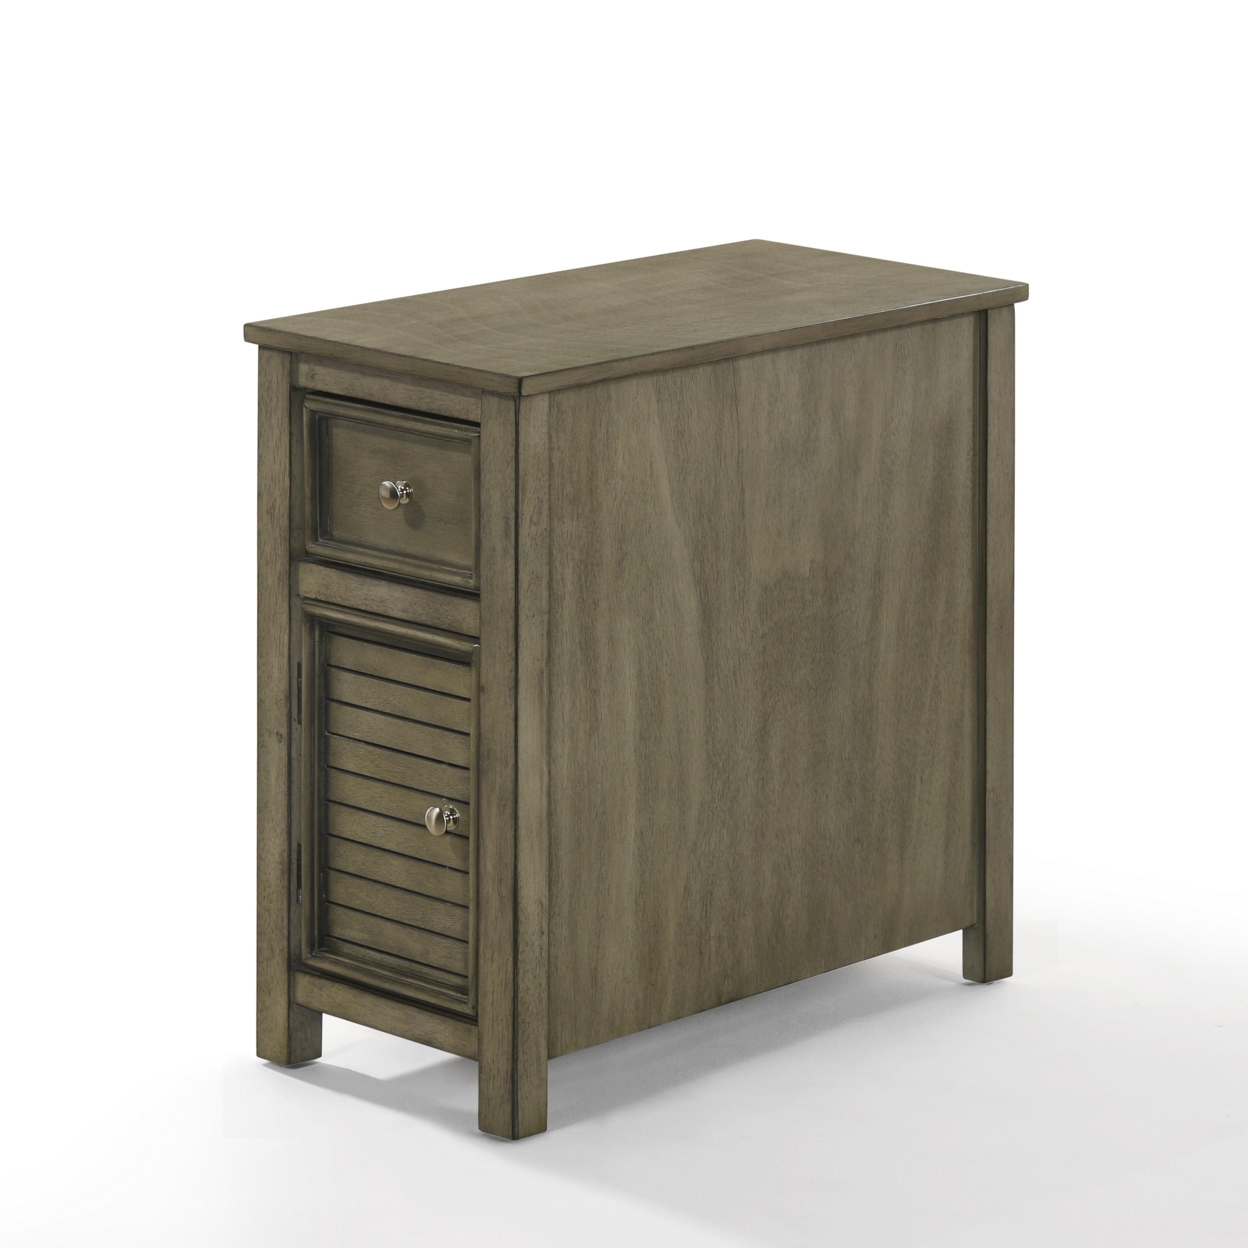 Dane 24 Inch Side End Table, Shutter Style Door Cabinet, Warm Gray Finish- Saltoro Sherpi